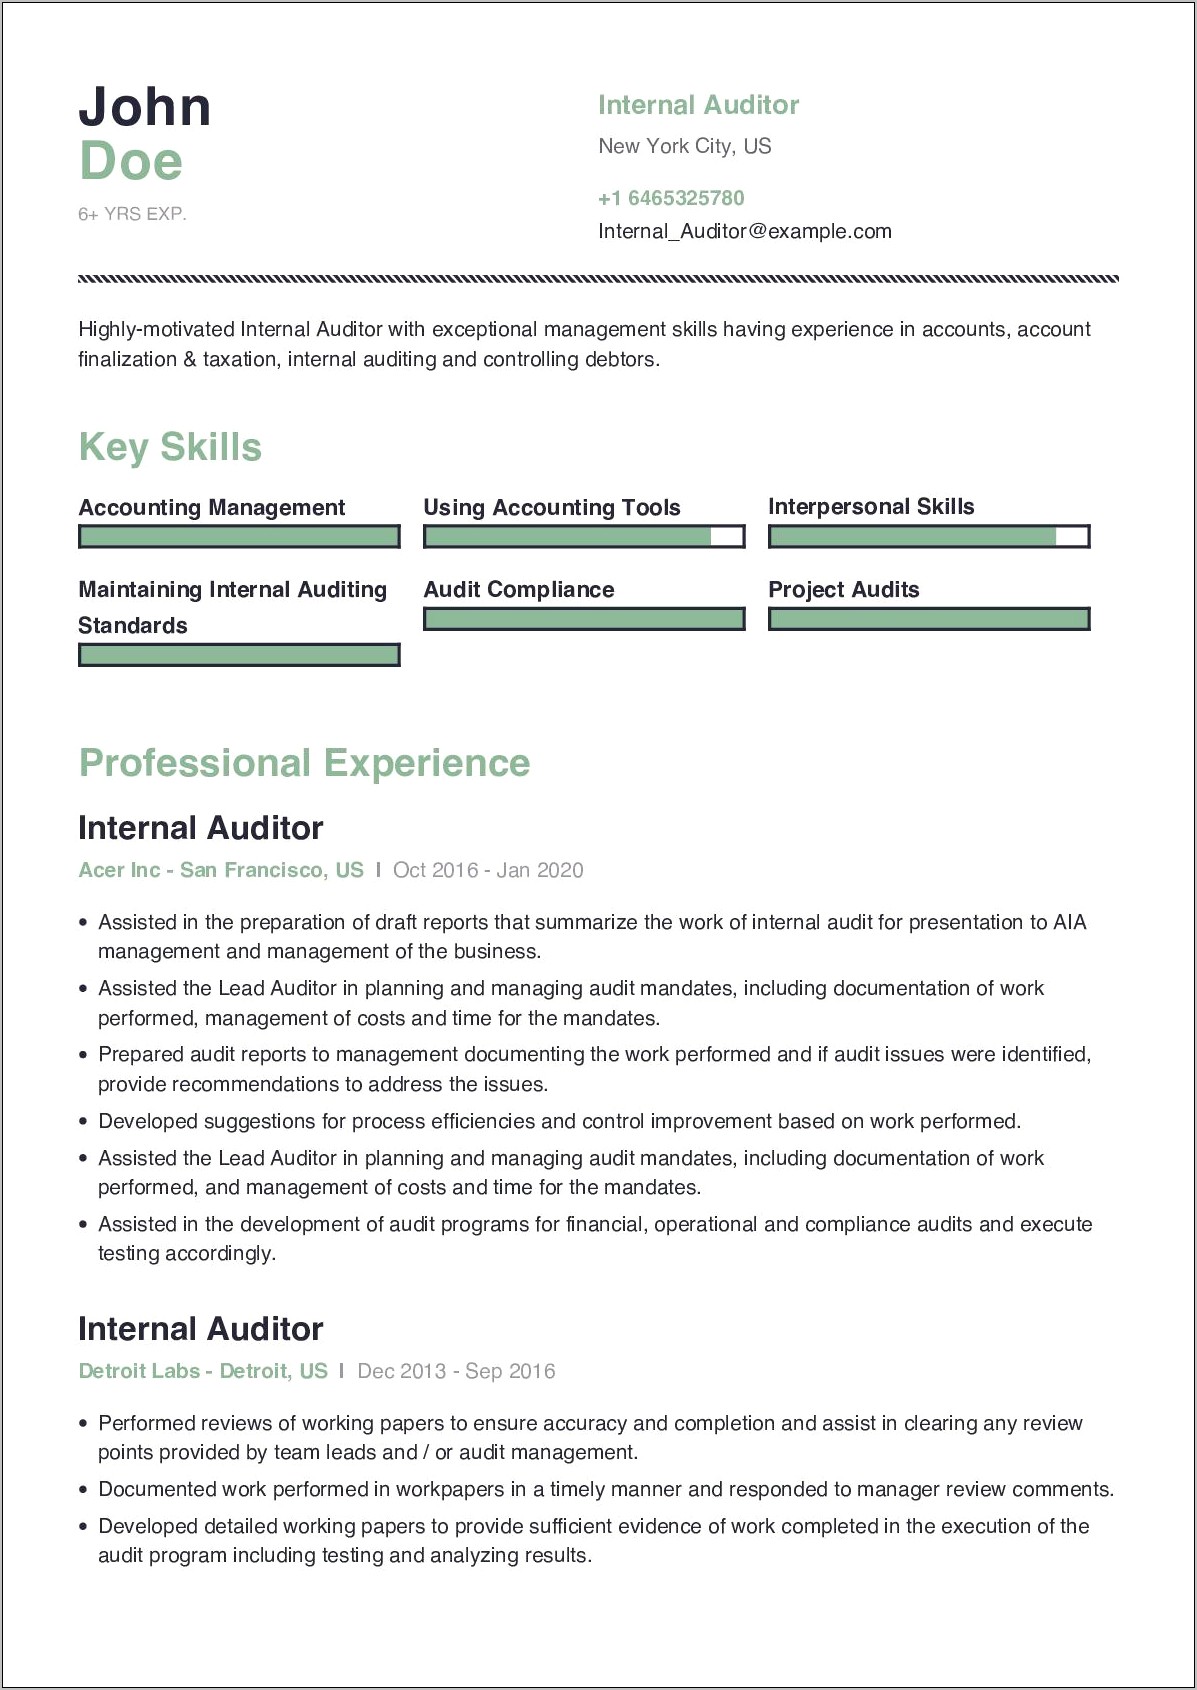 Key Skills For Auditor Resume